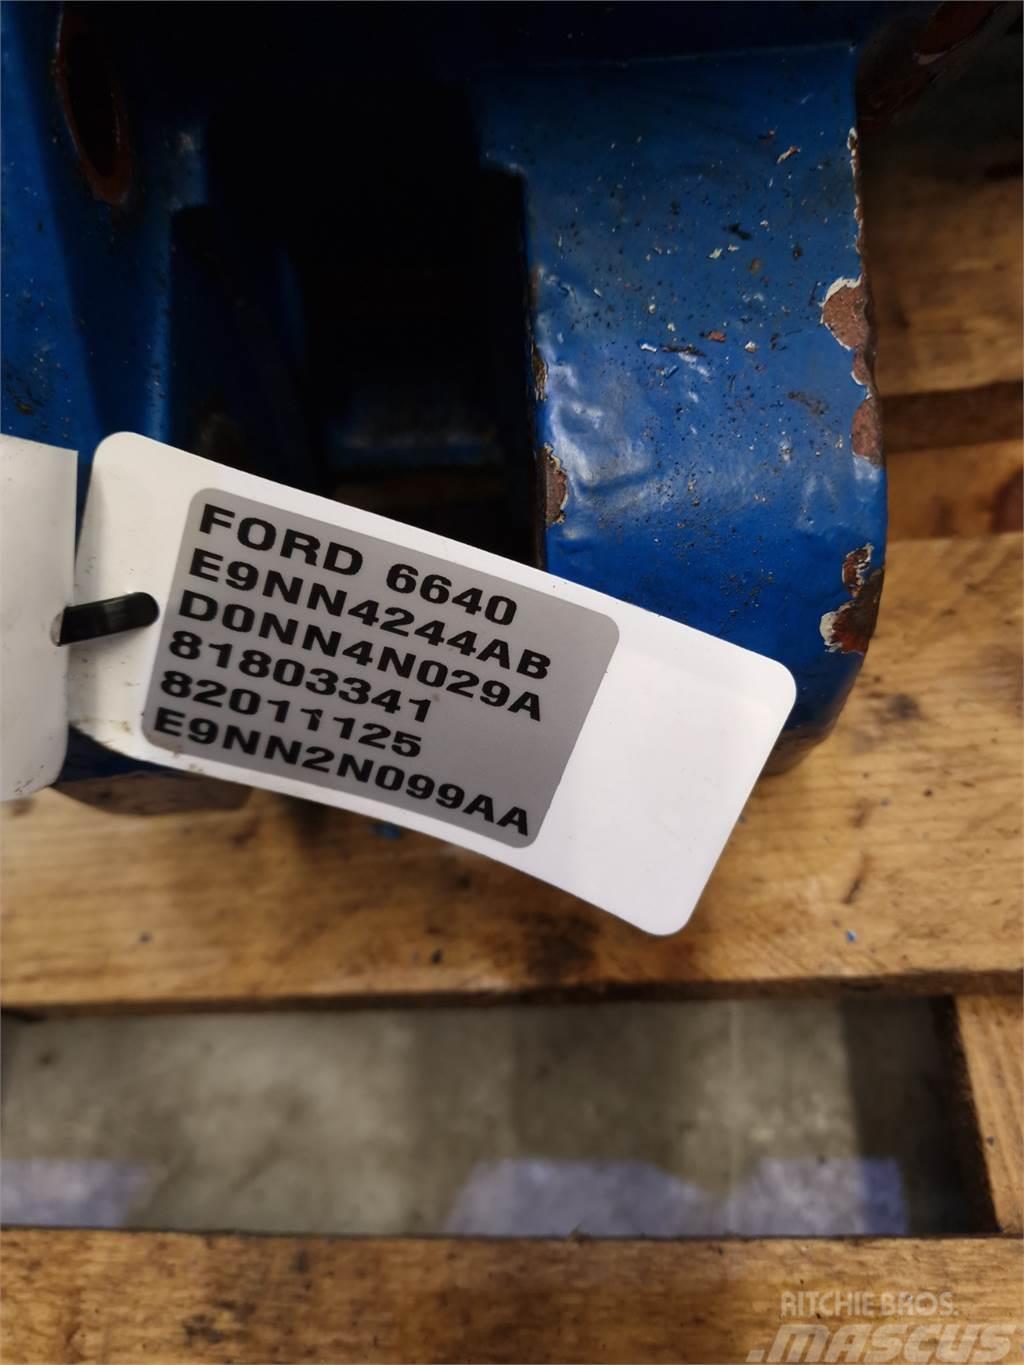 Ford 6640 Μετάδοση